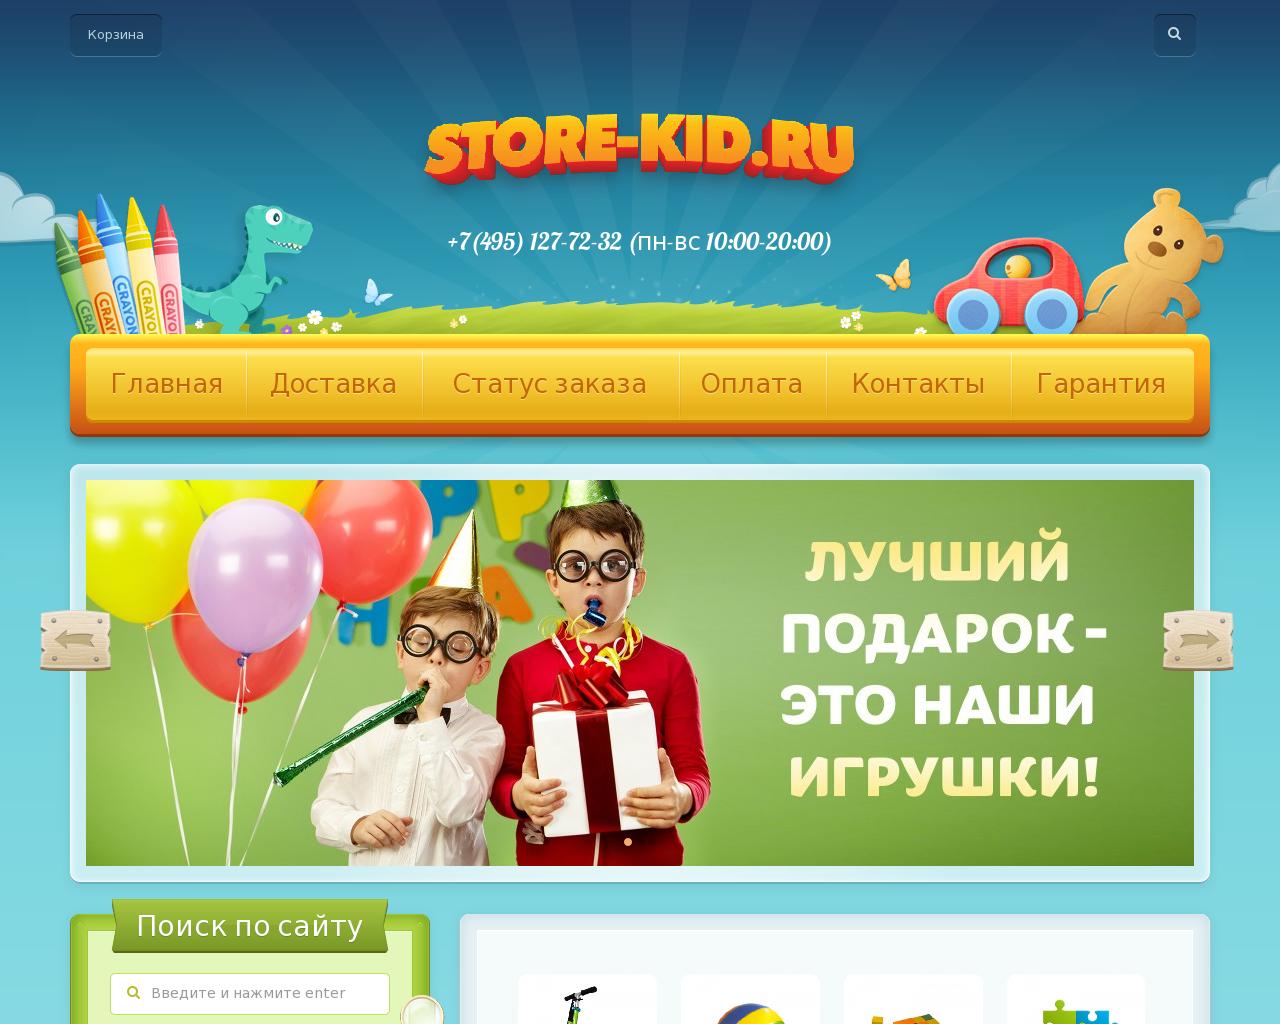 Изображение сайта store-kid.ru в разрешении 1280x1024